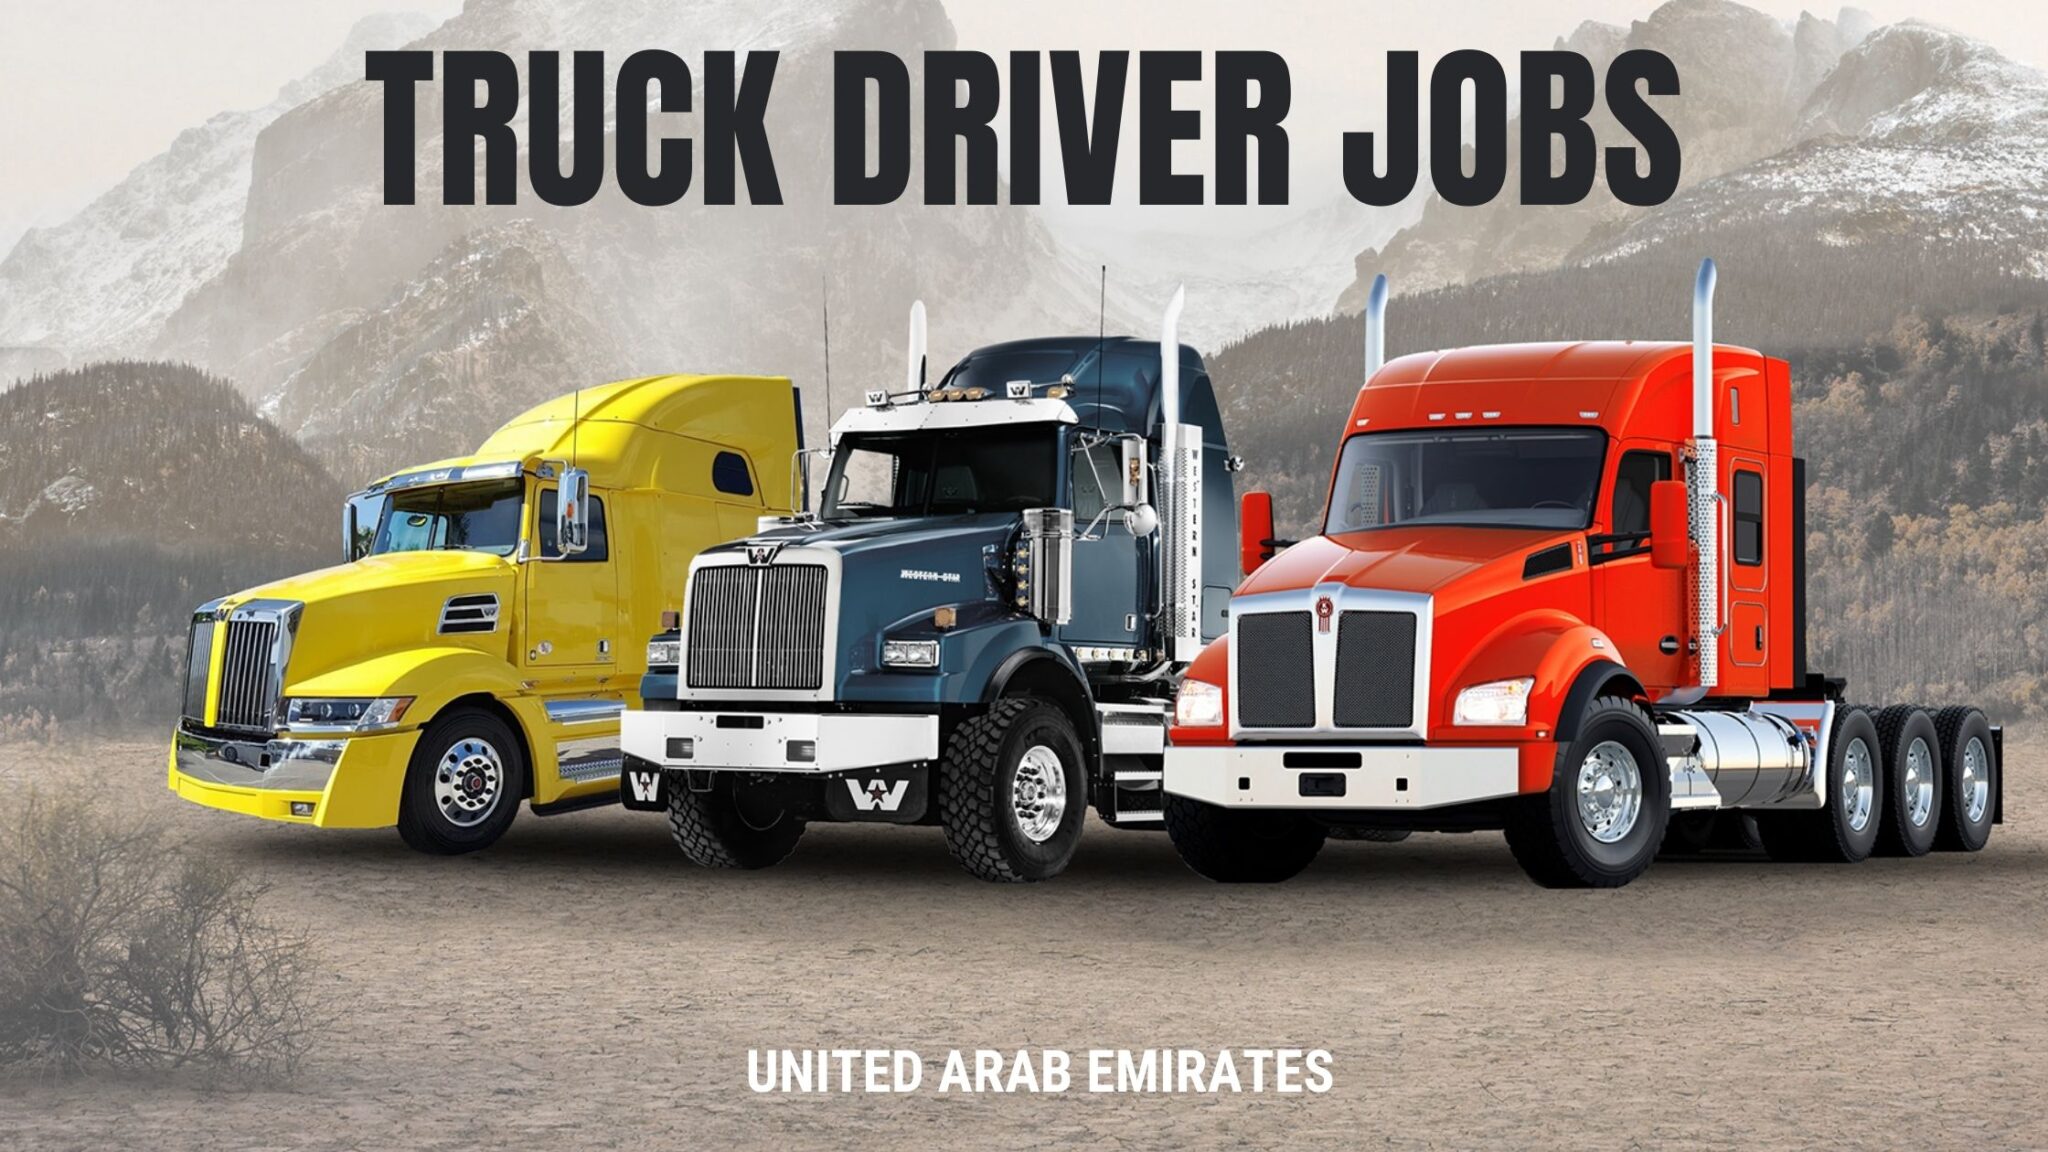 Truck Driver Job download the new